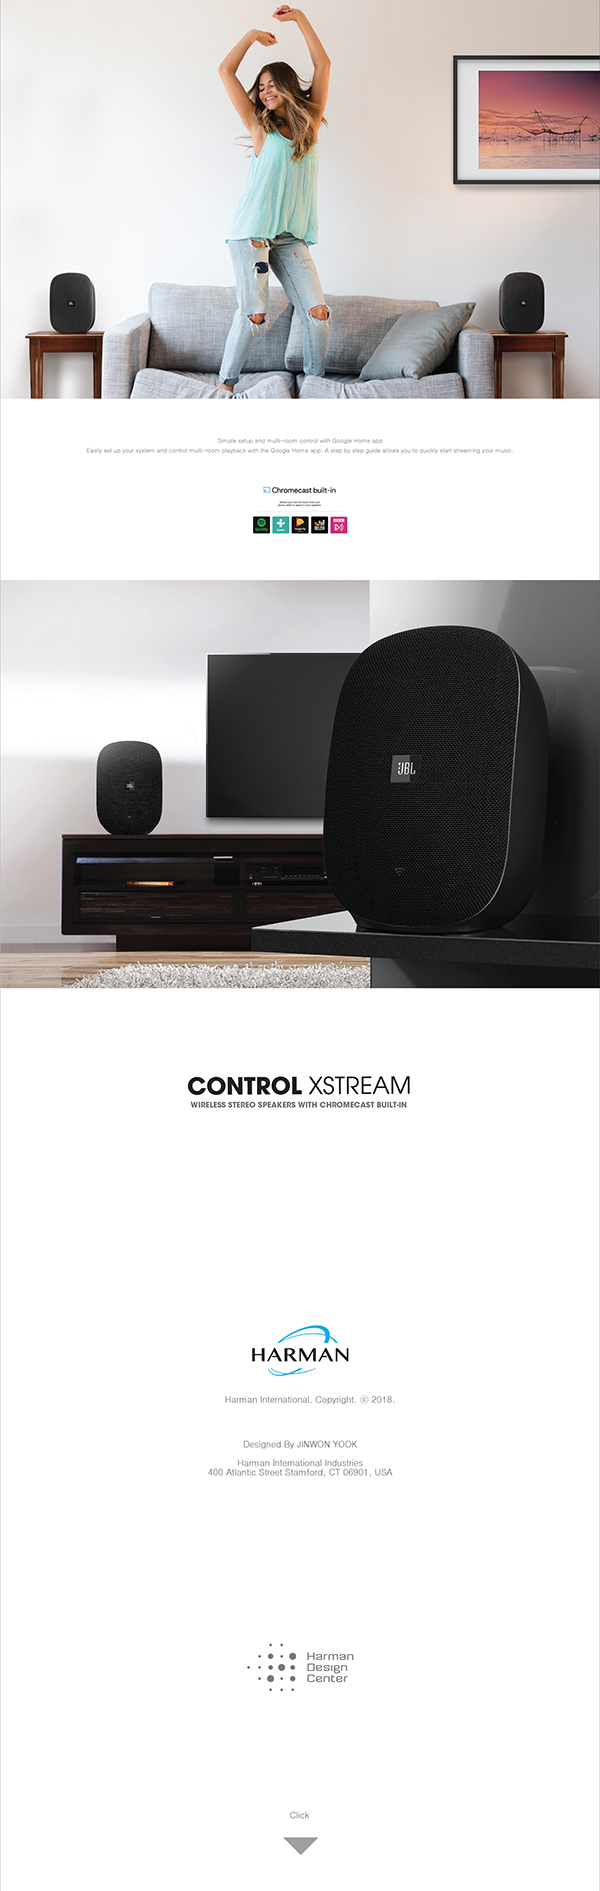 JBL CONTROL XSTREAM Wireless stereo speakers